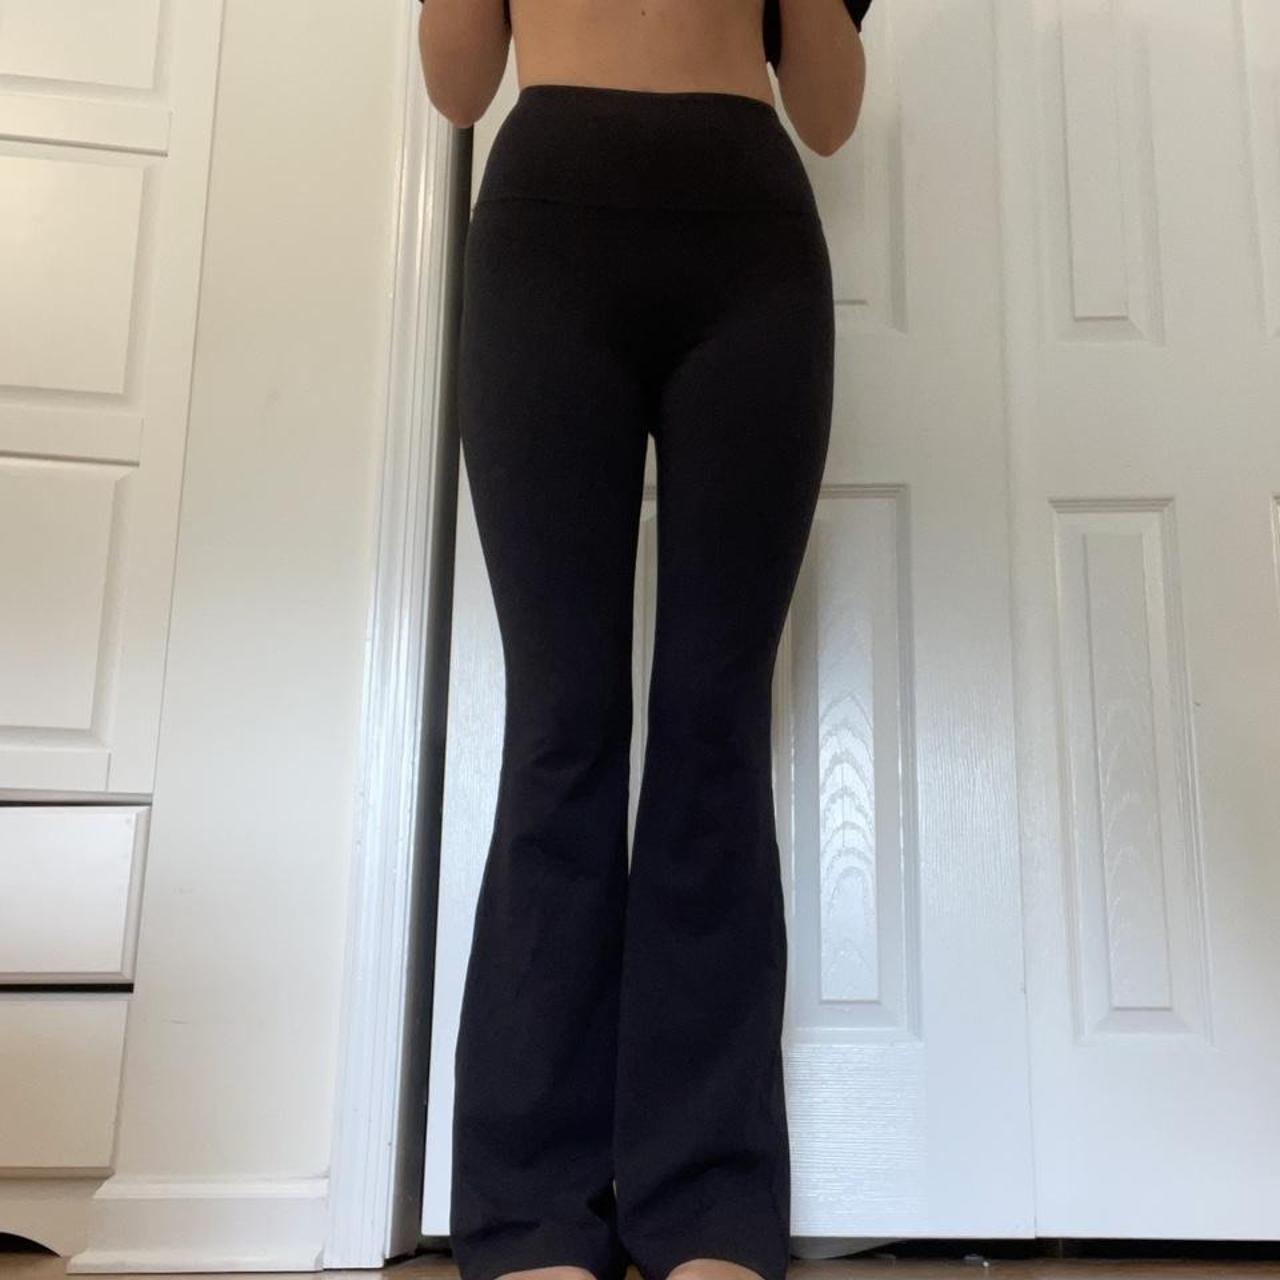 Black Fila yoga pants. very comfy and stretchy, draw - Depop